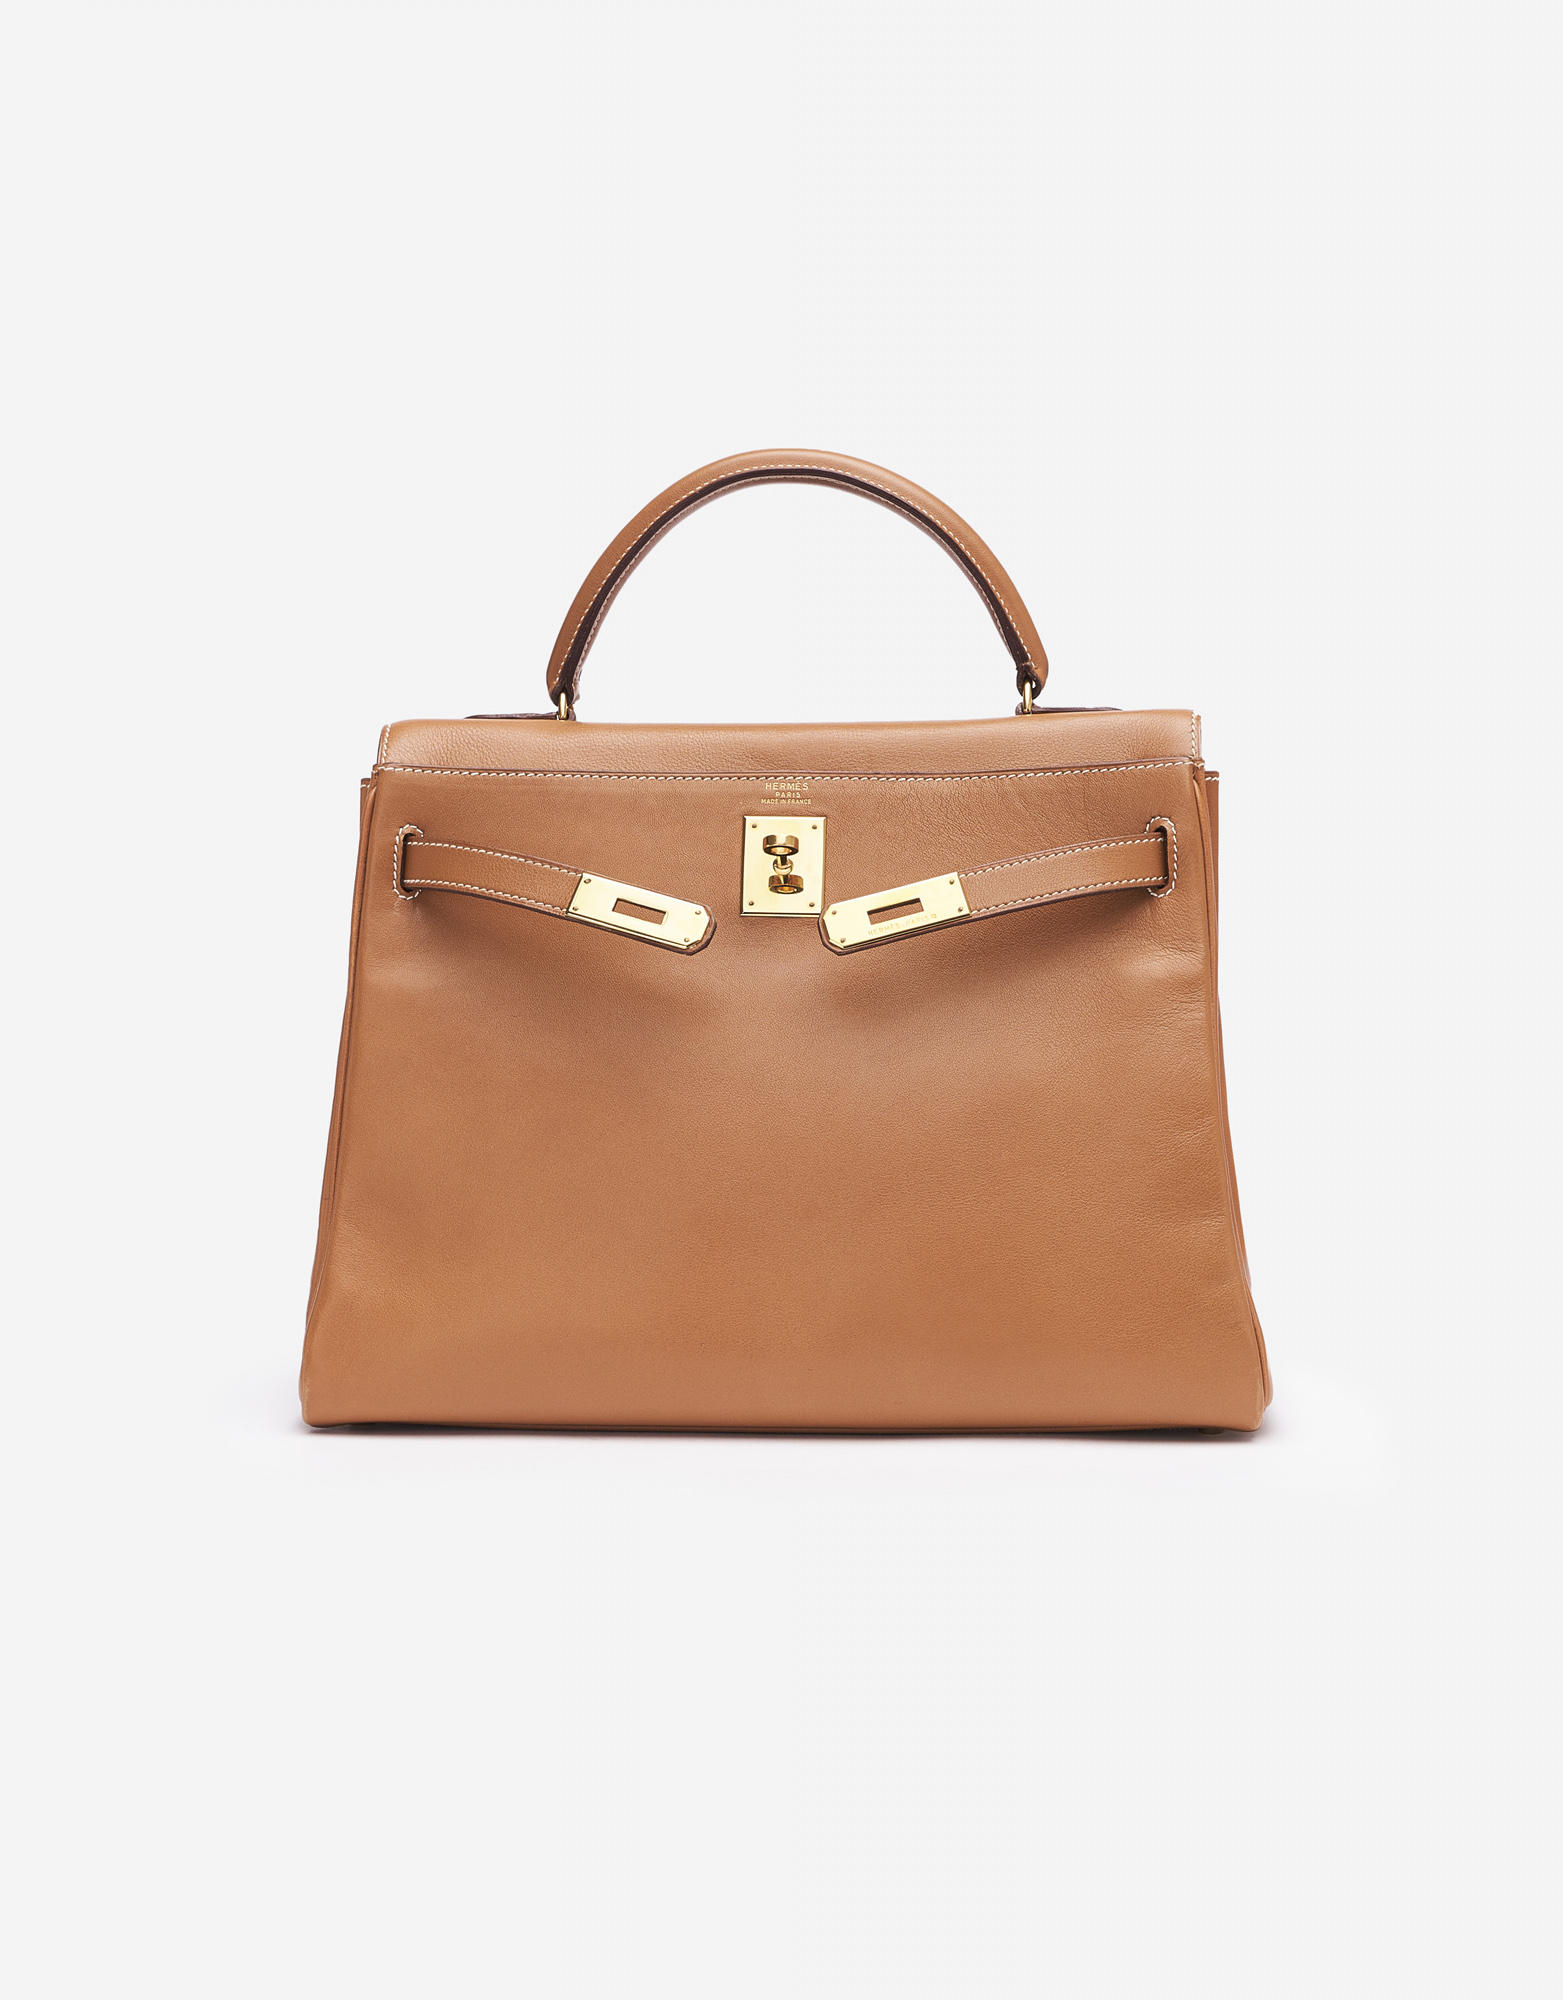 HERMES Kelly 35 Gold Gulliver Leather Retourne Woman's Handbag w/ Dustbag